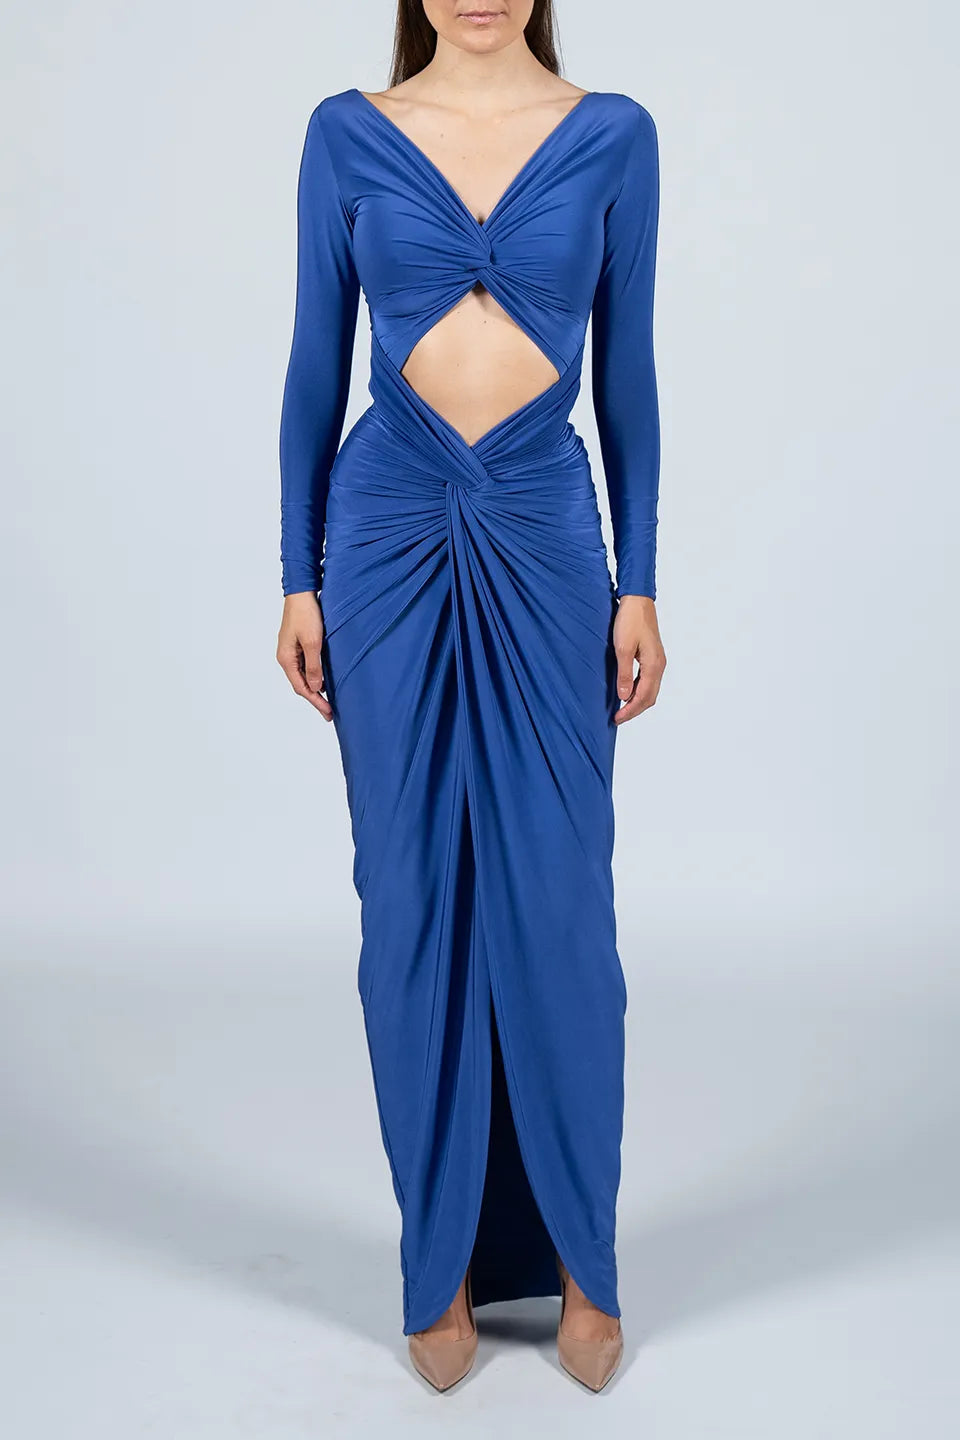 Shop online trendy Blue Maxi dresses from Hamel Fashion designer. Product gallery 1